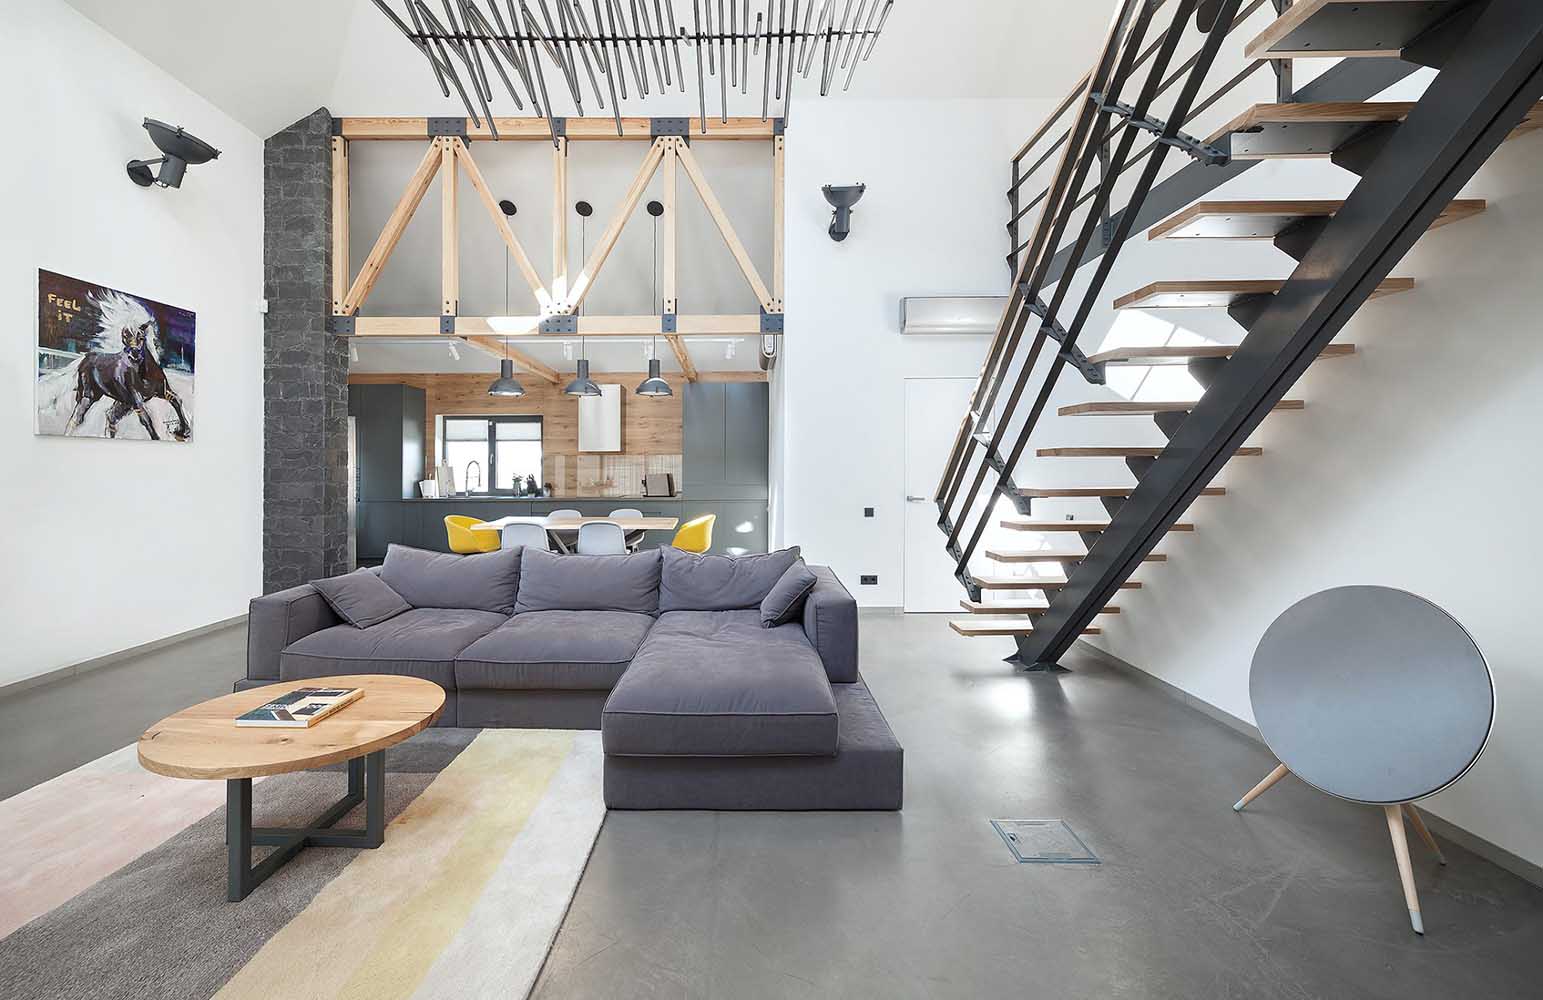 design interior house for family by tseh 01 - Реконструкция и дизайн интерьера дома в минималистическом стиле by TSEH